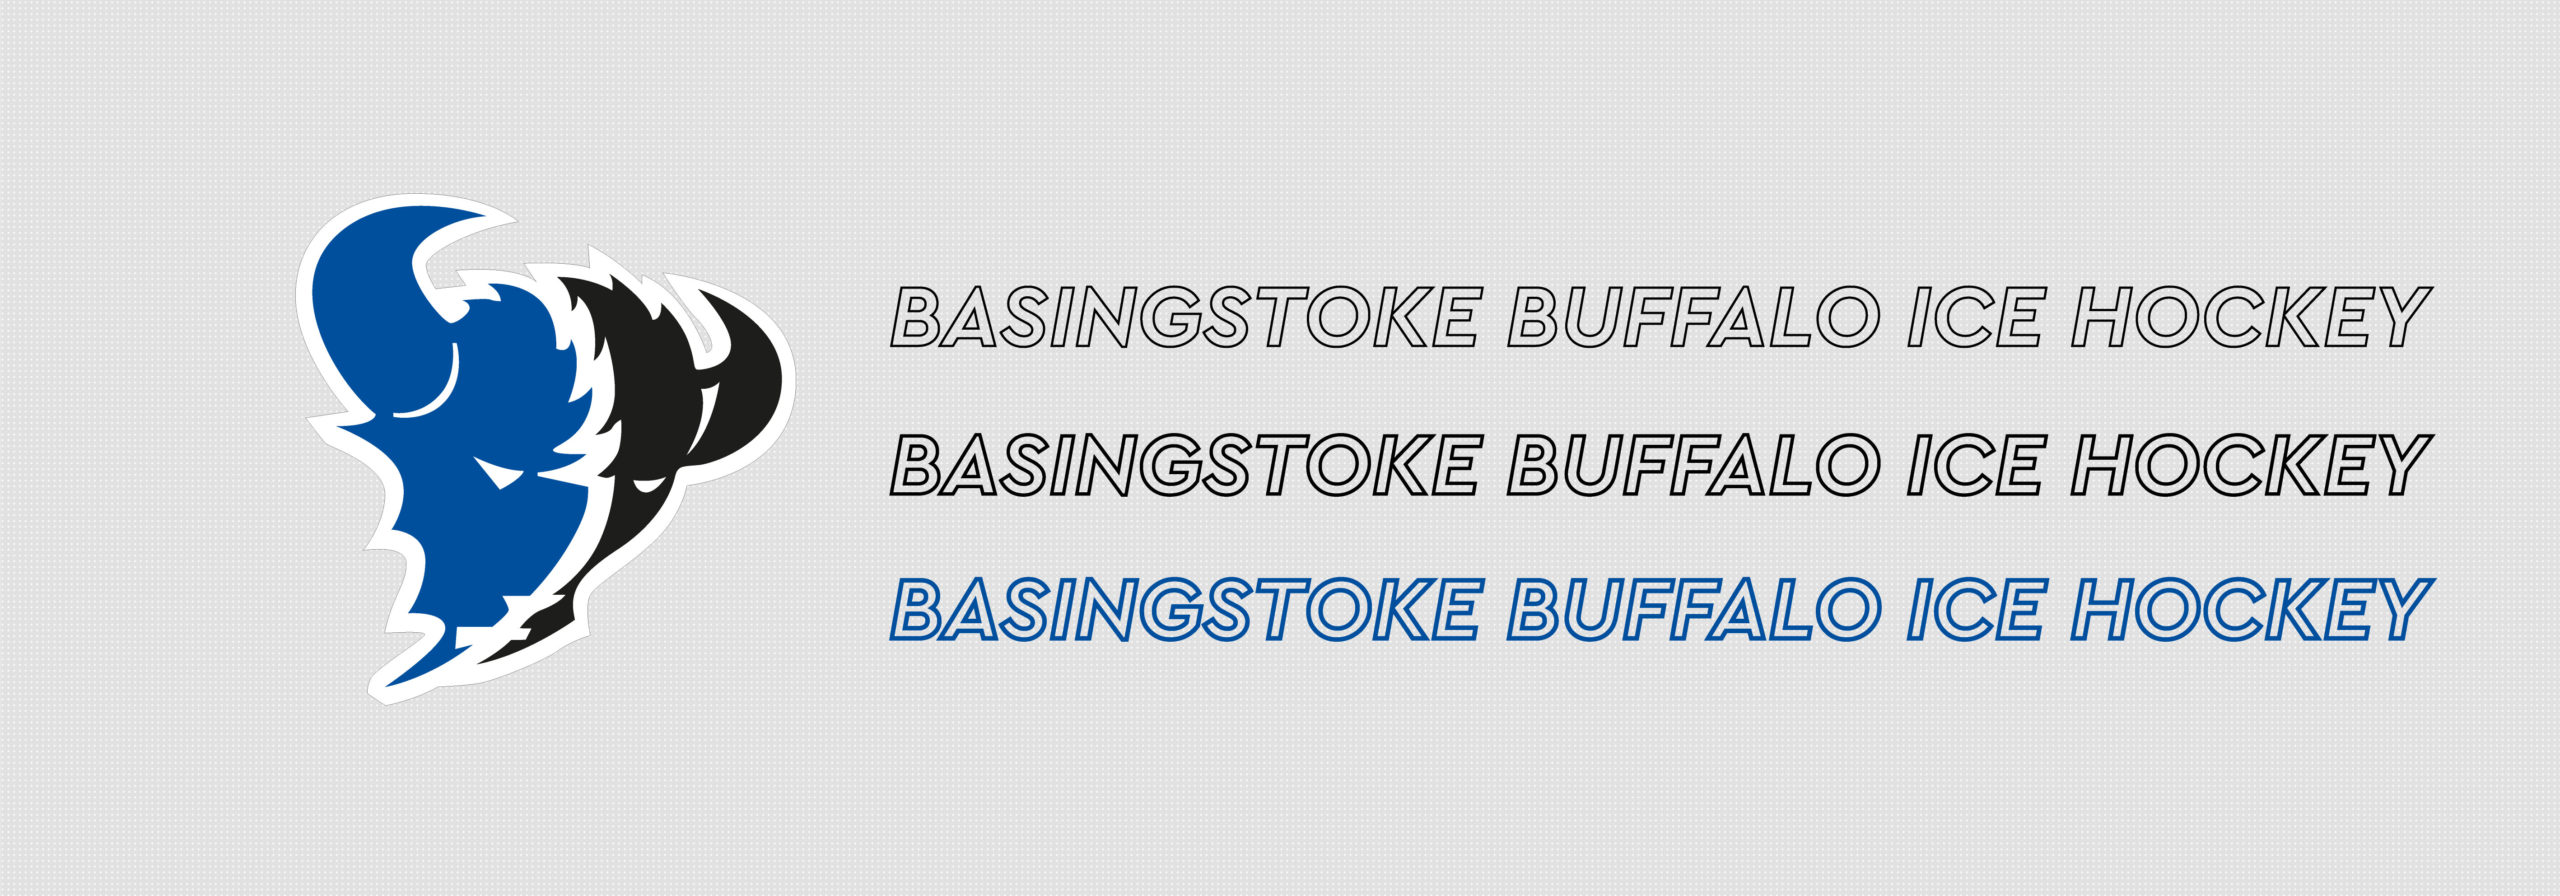 Basingstoke Buffalo Ice Hockey Jersey